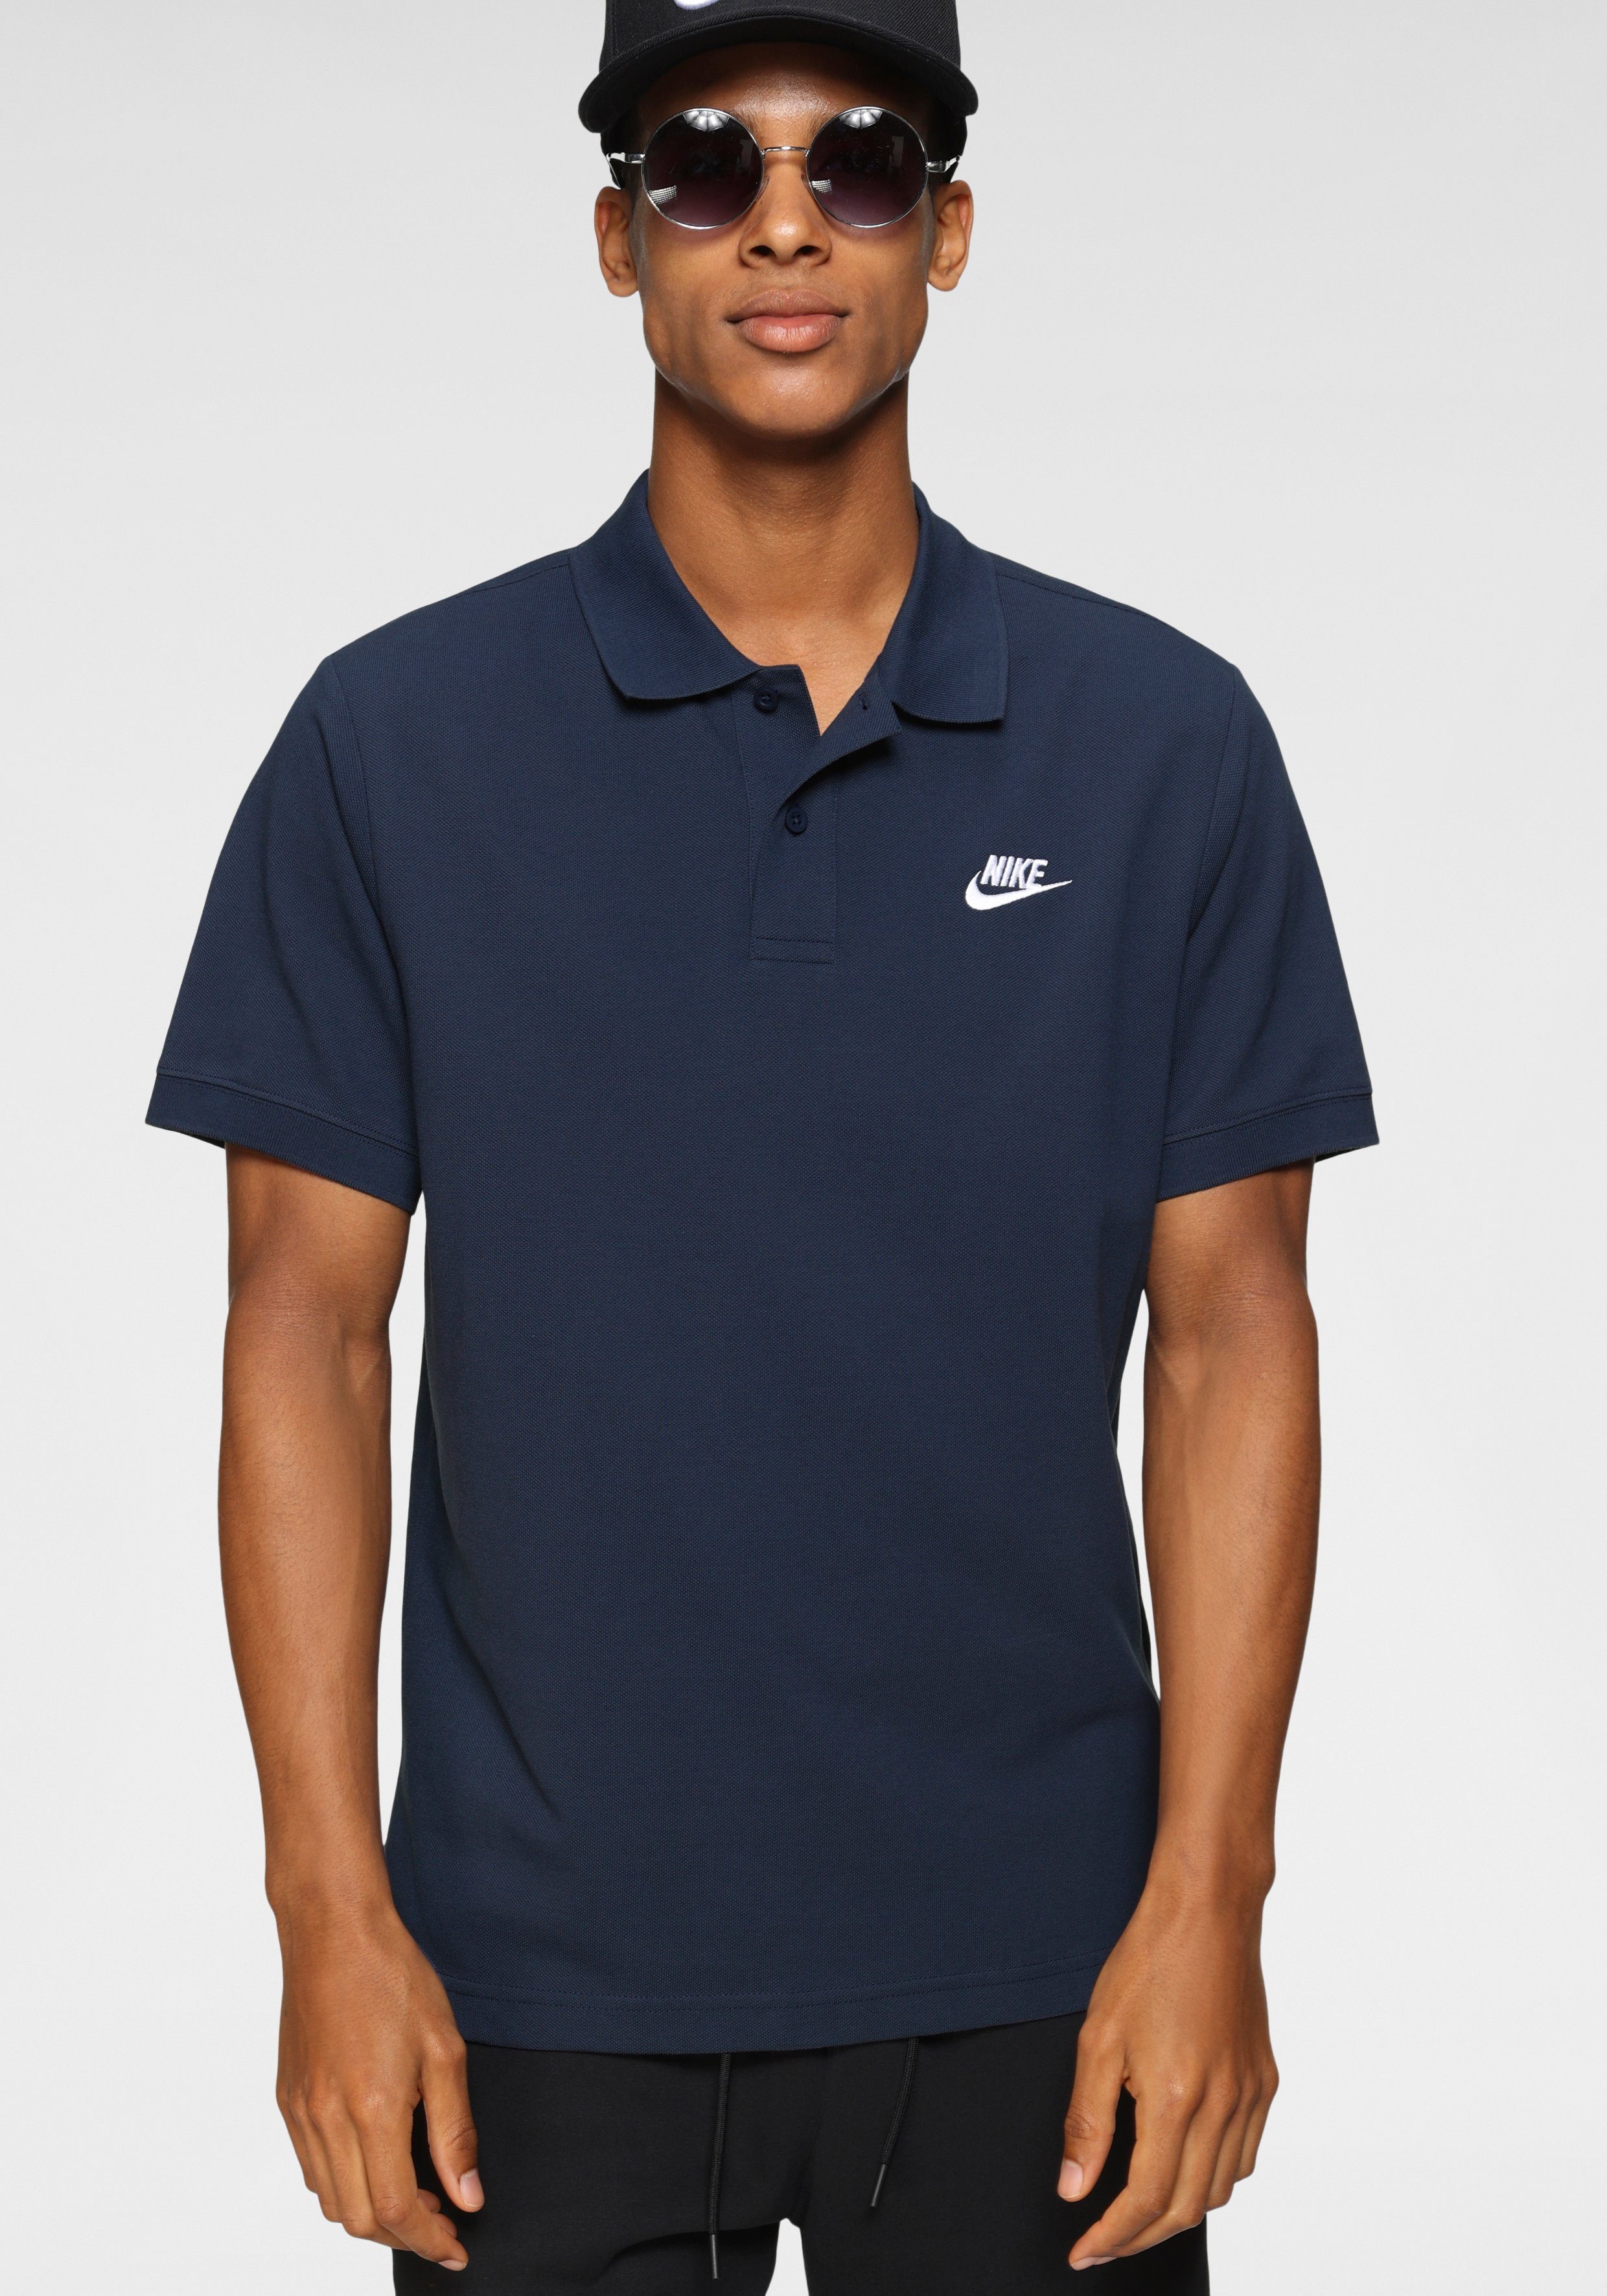 Nike Sportswear Poloshirt Men's Polo marine